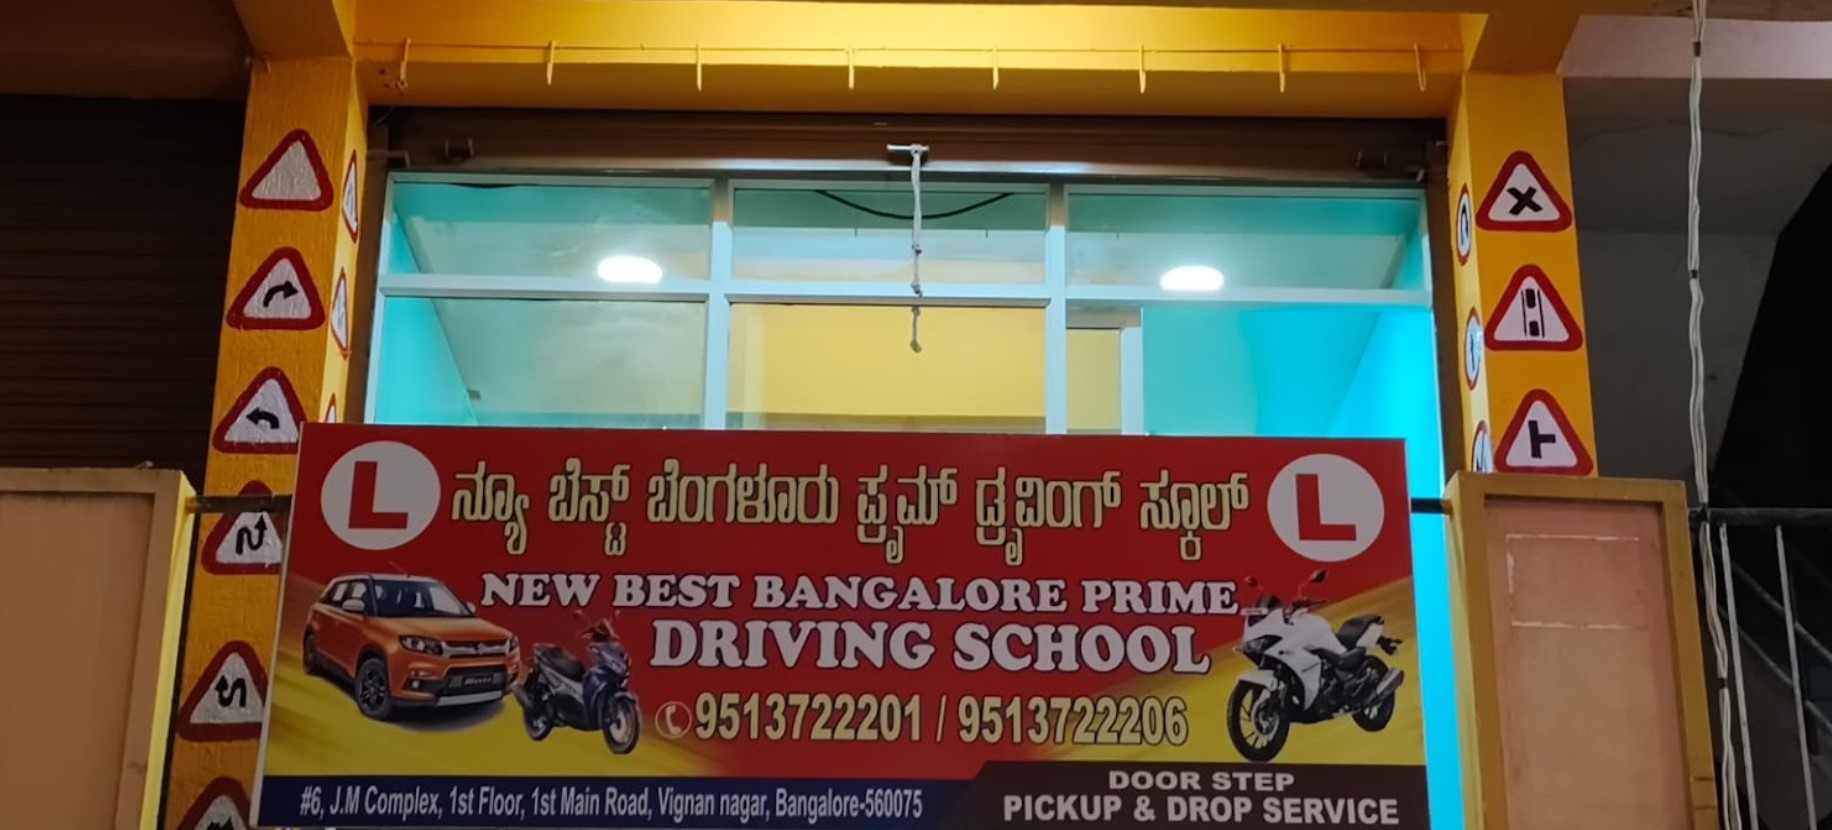 New Best Bangalore Prime Driving School in Kaggadasapura